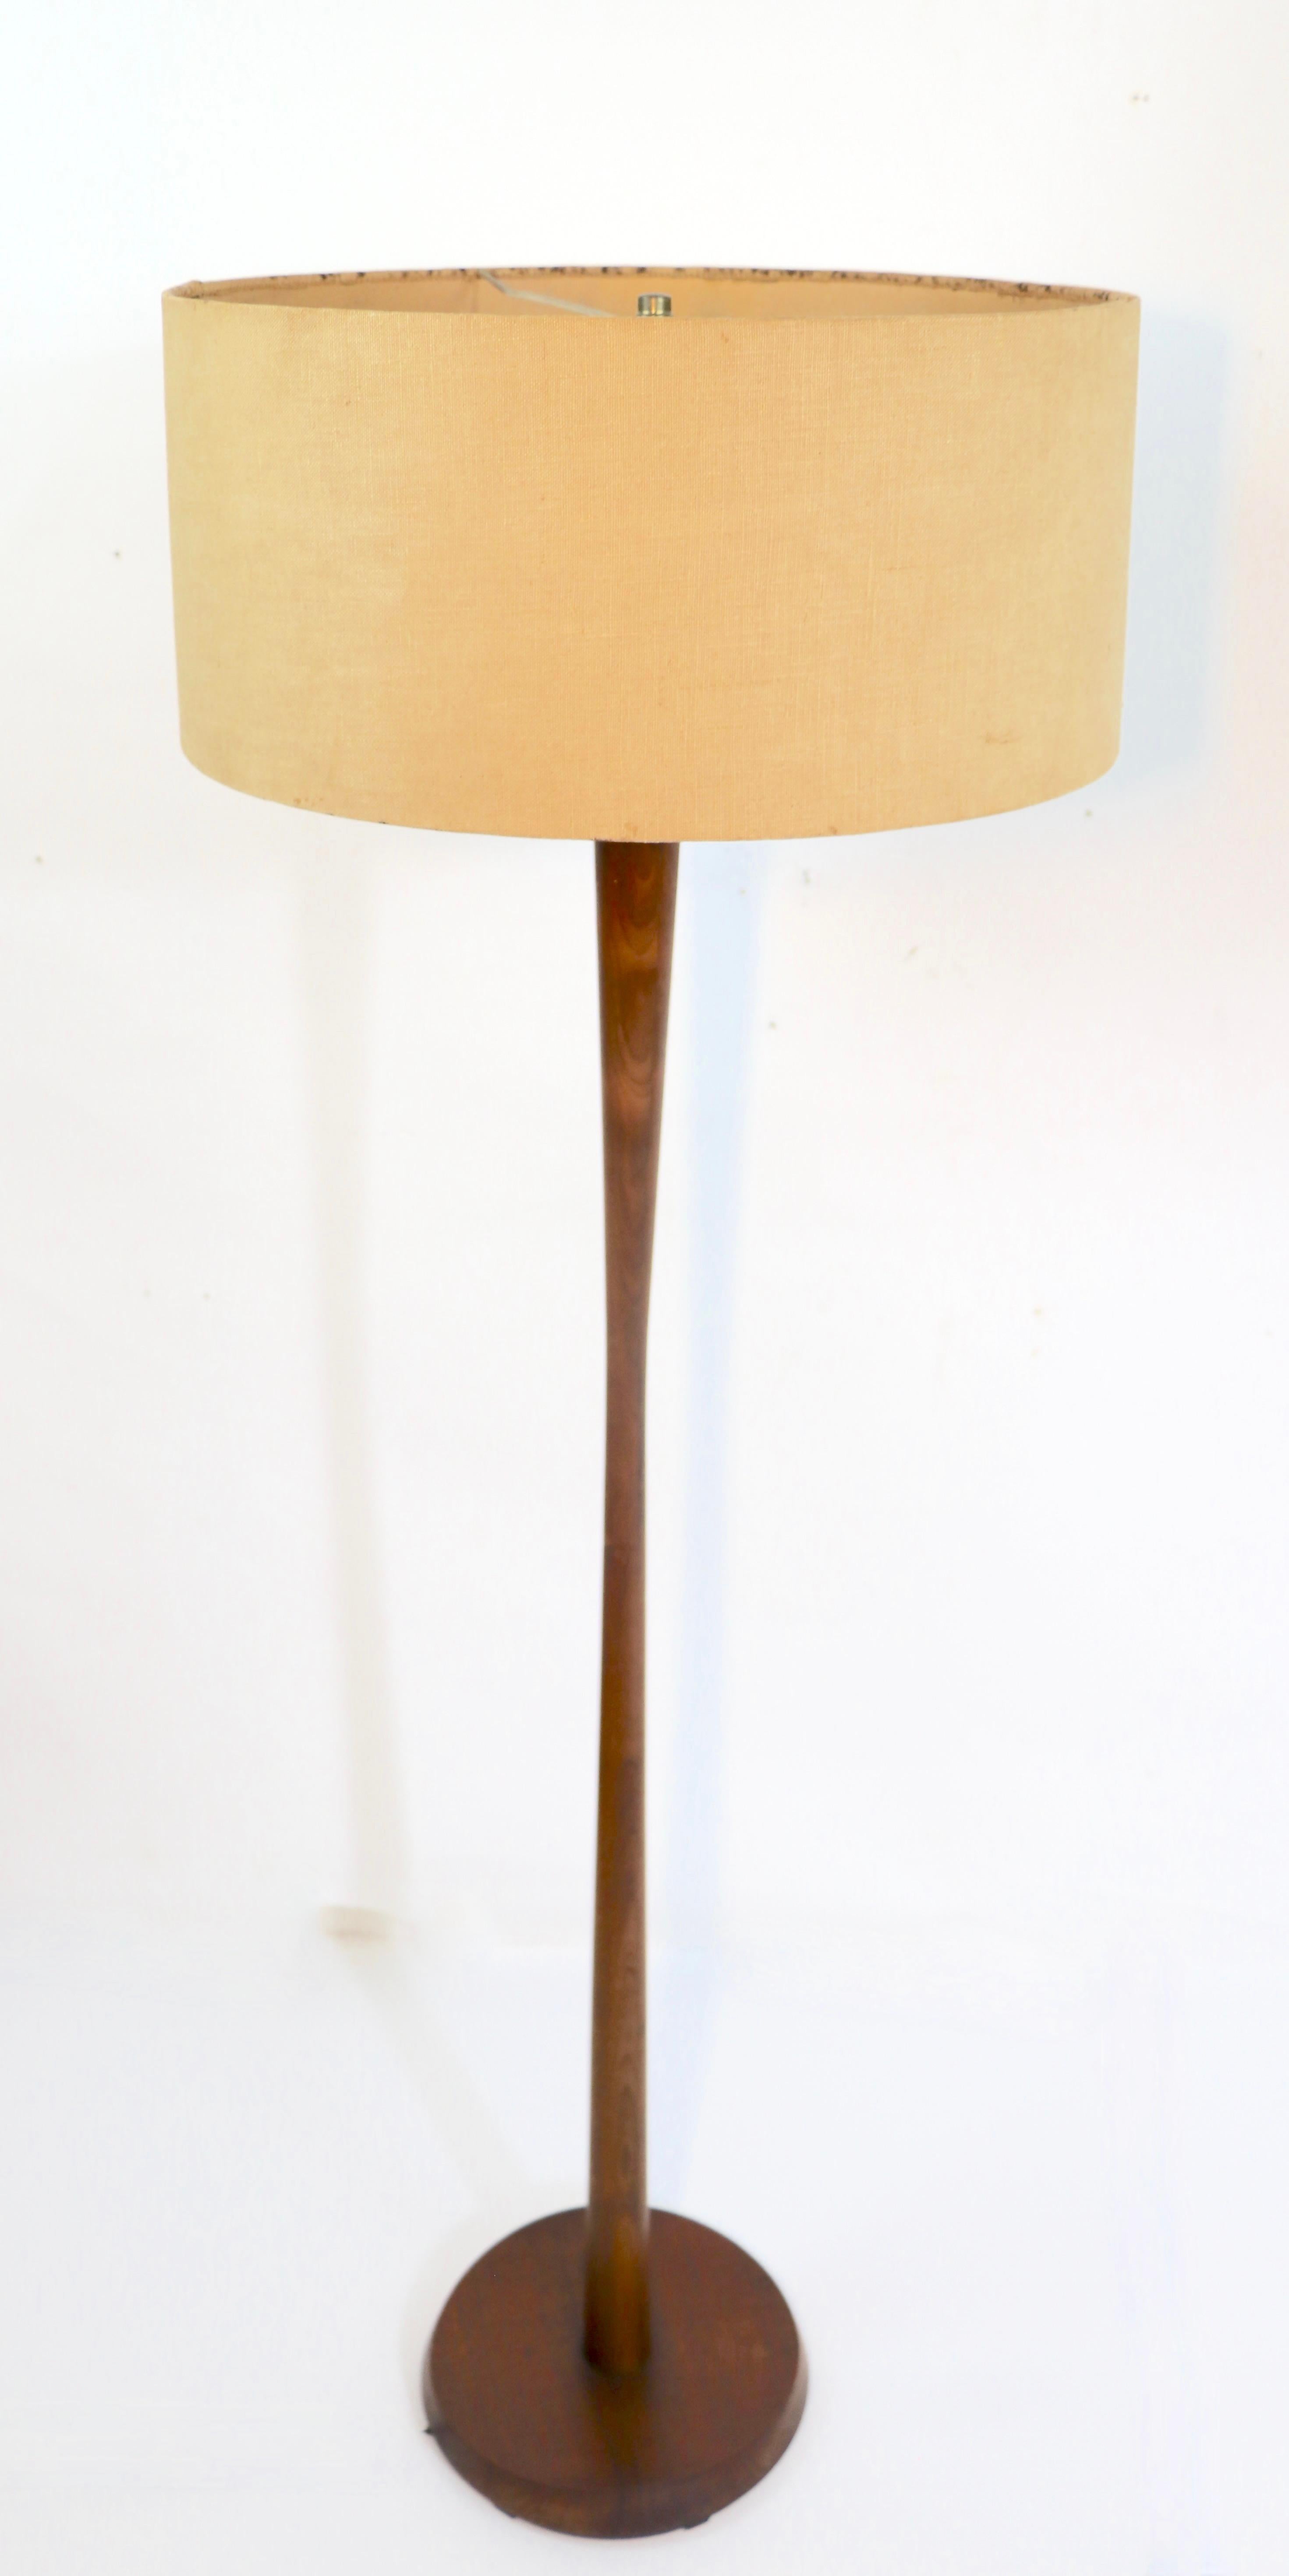 20th Century Danish Modern Teak Floor Lamp with Sculpted Base